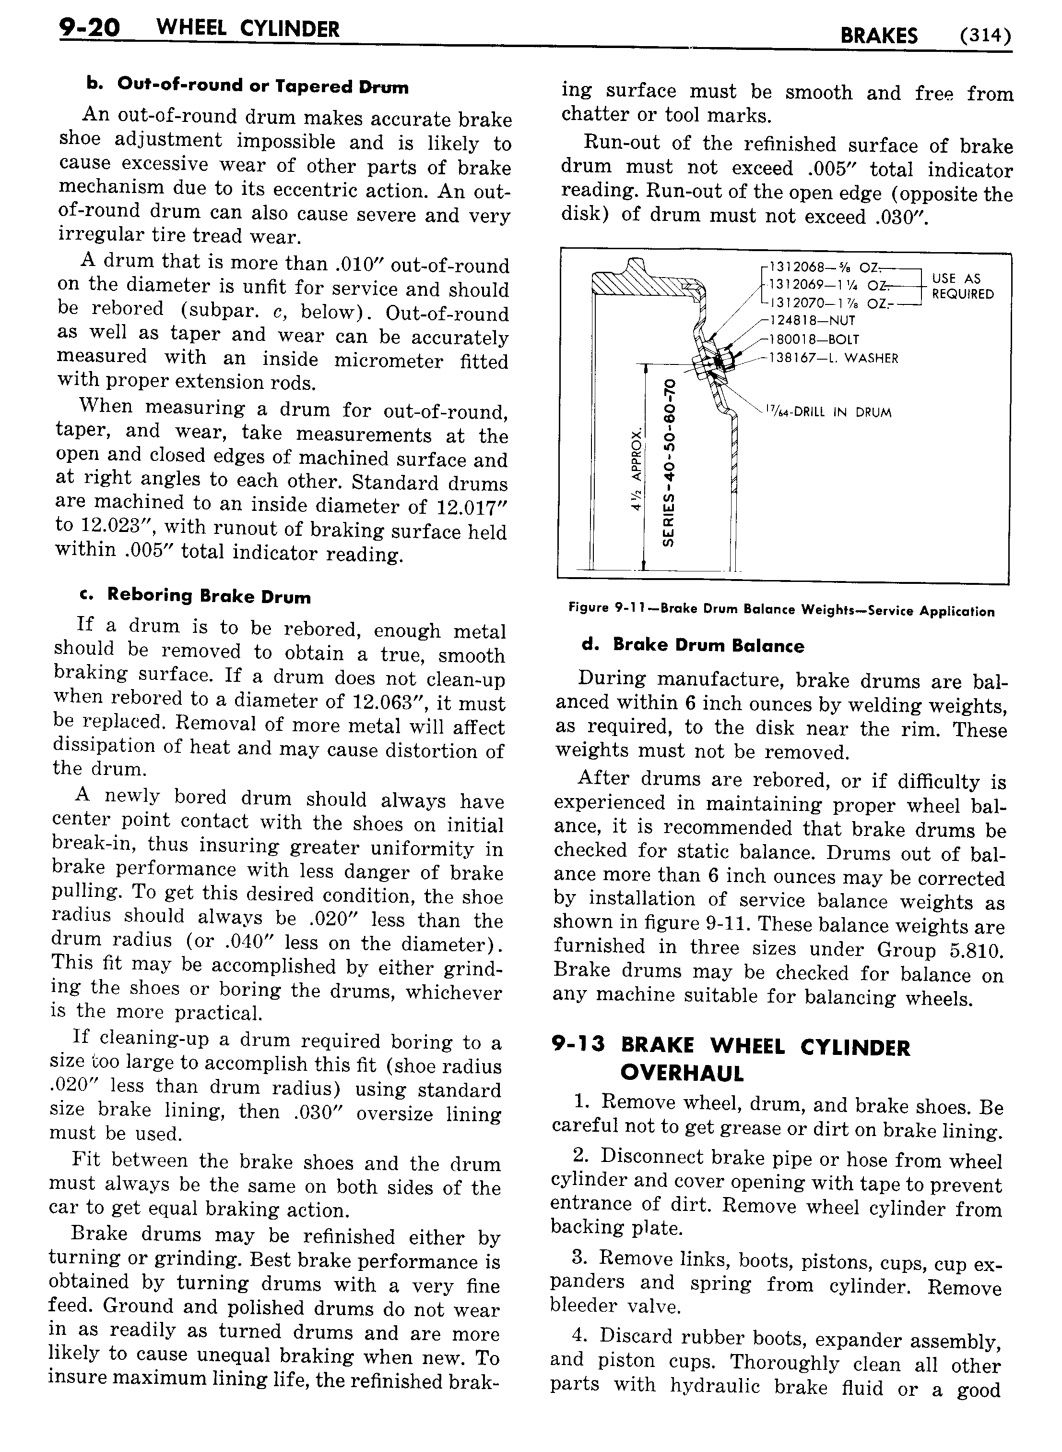 n_10 1956 Buick Shop Manual - Brakes-020-020.jpg